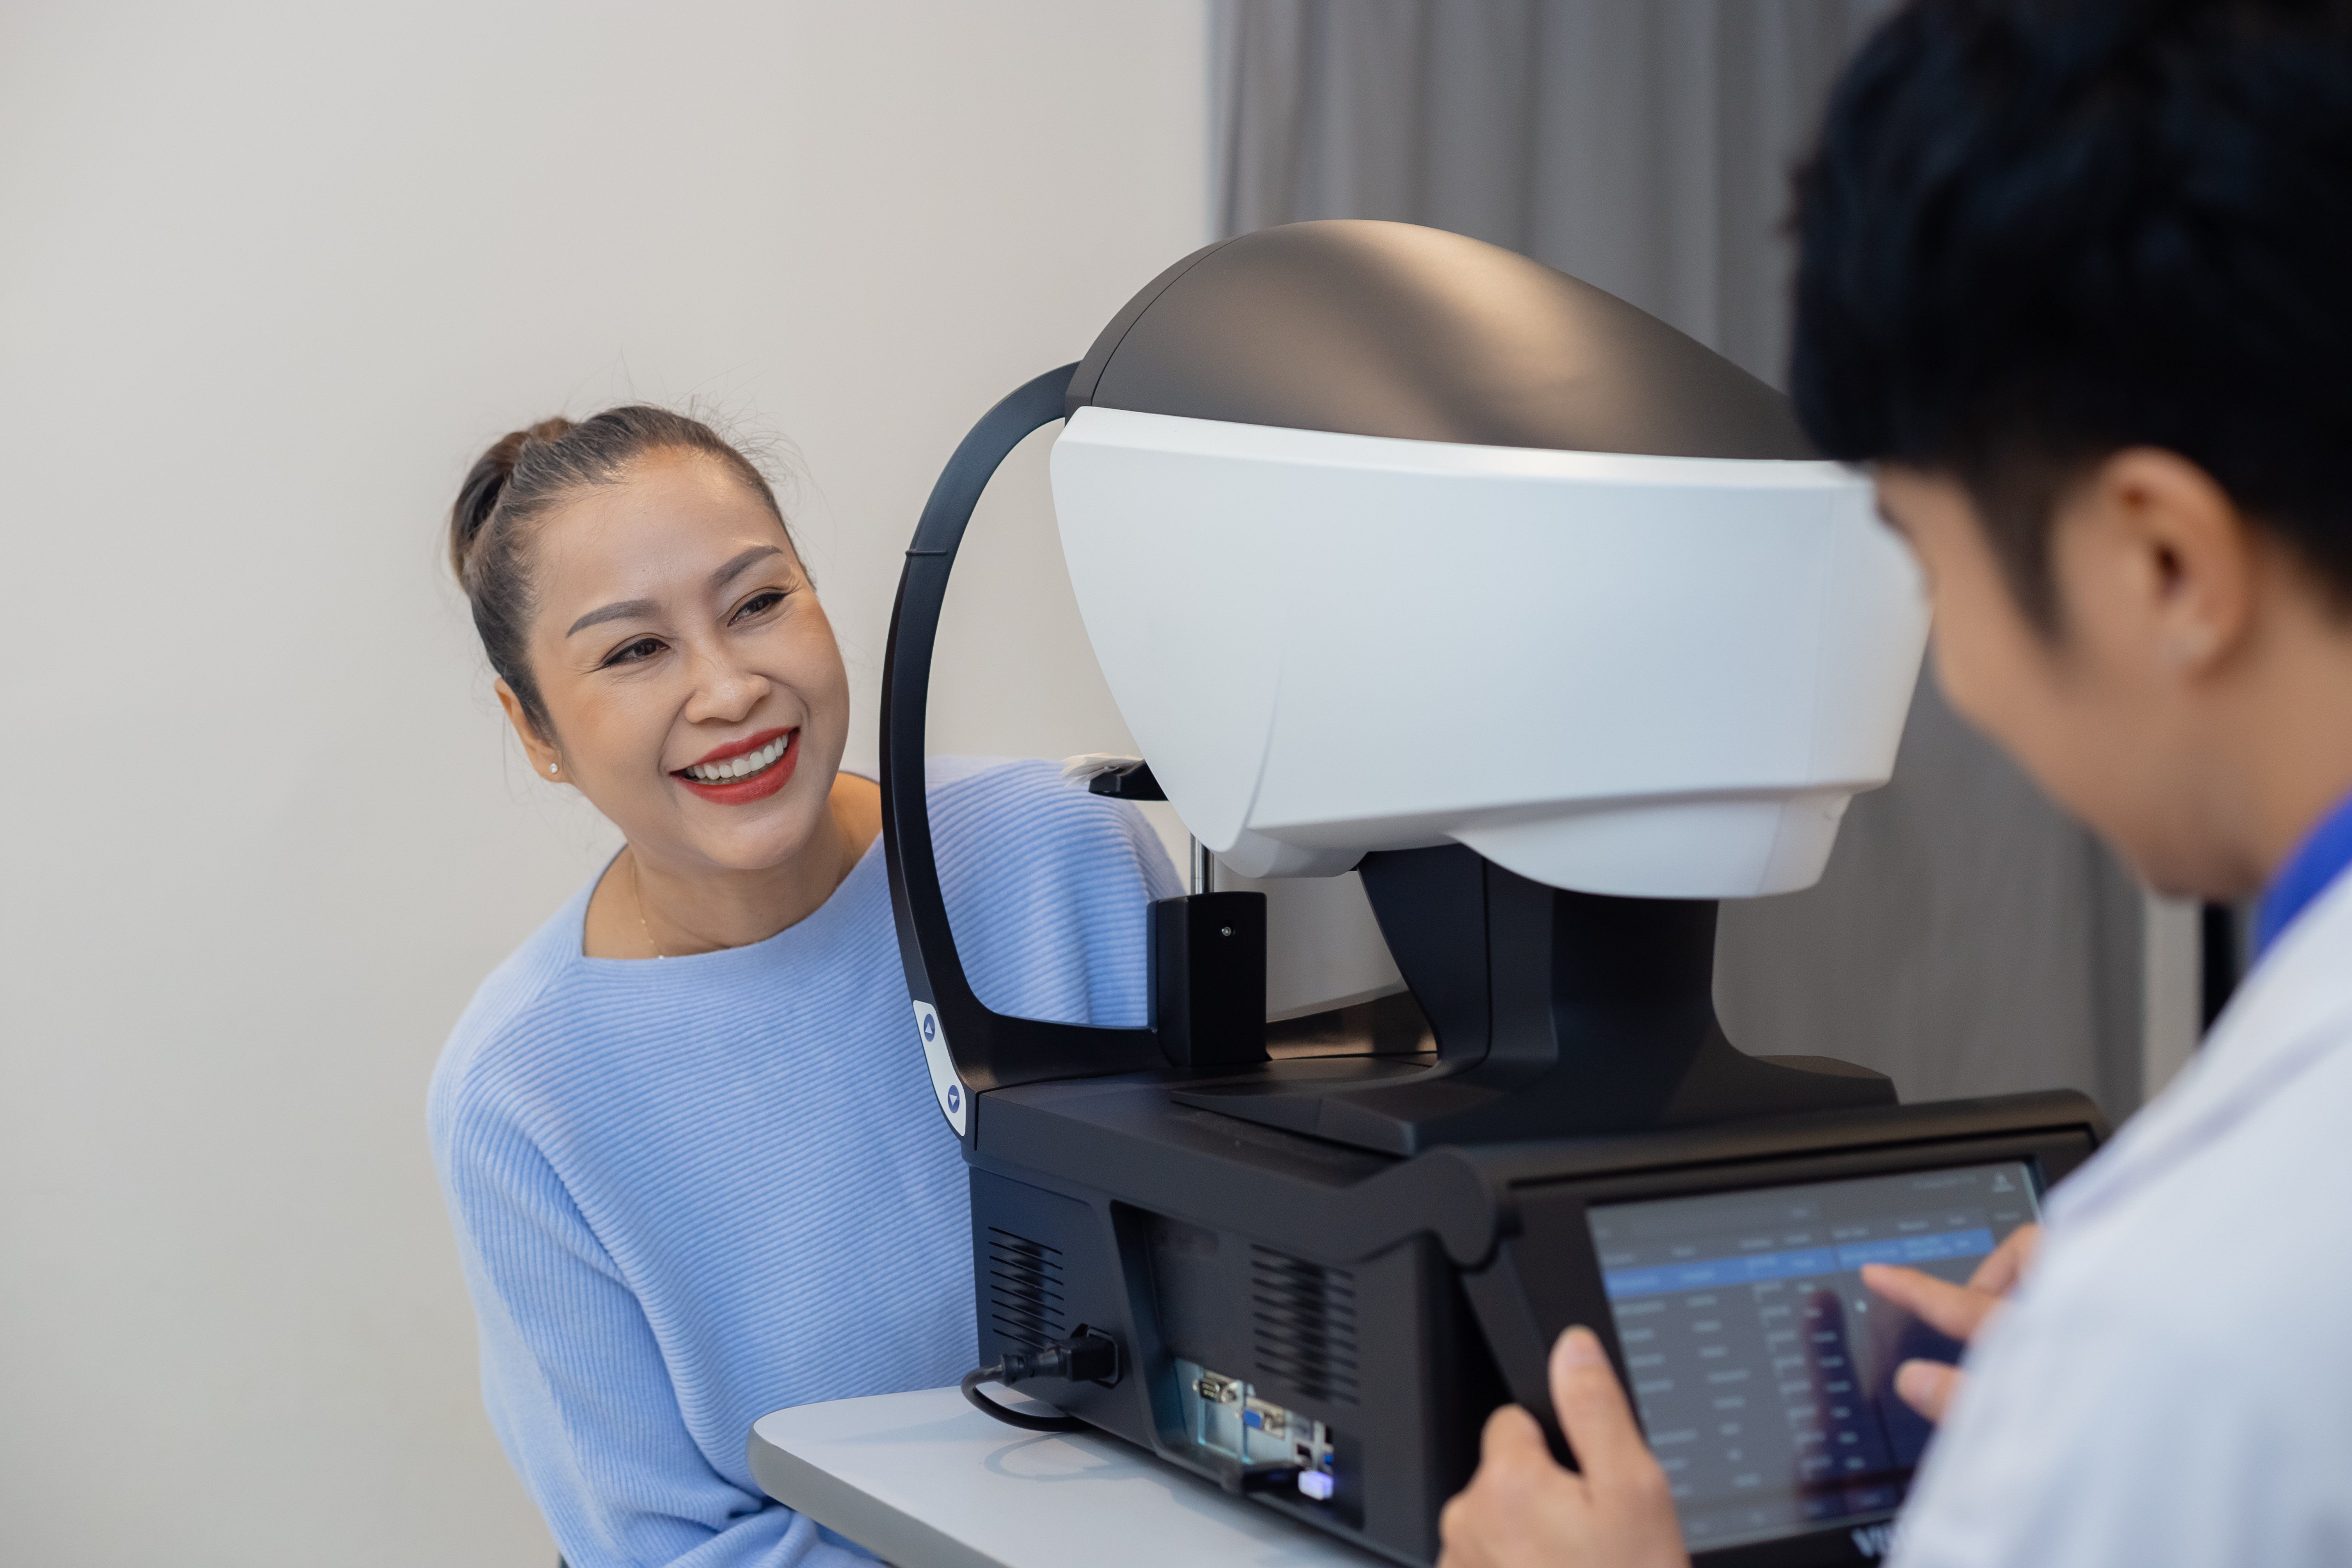 Advanced Eye Equipment: How It Can Improve Vision Health